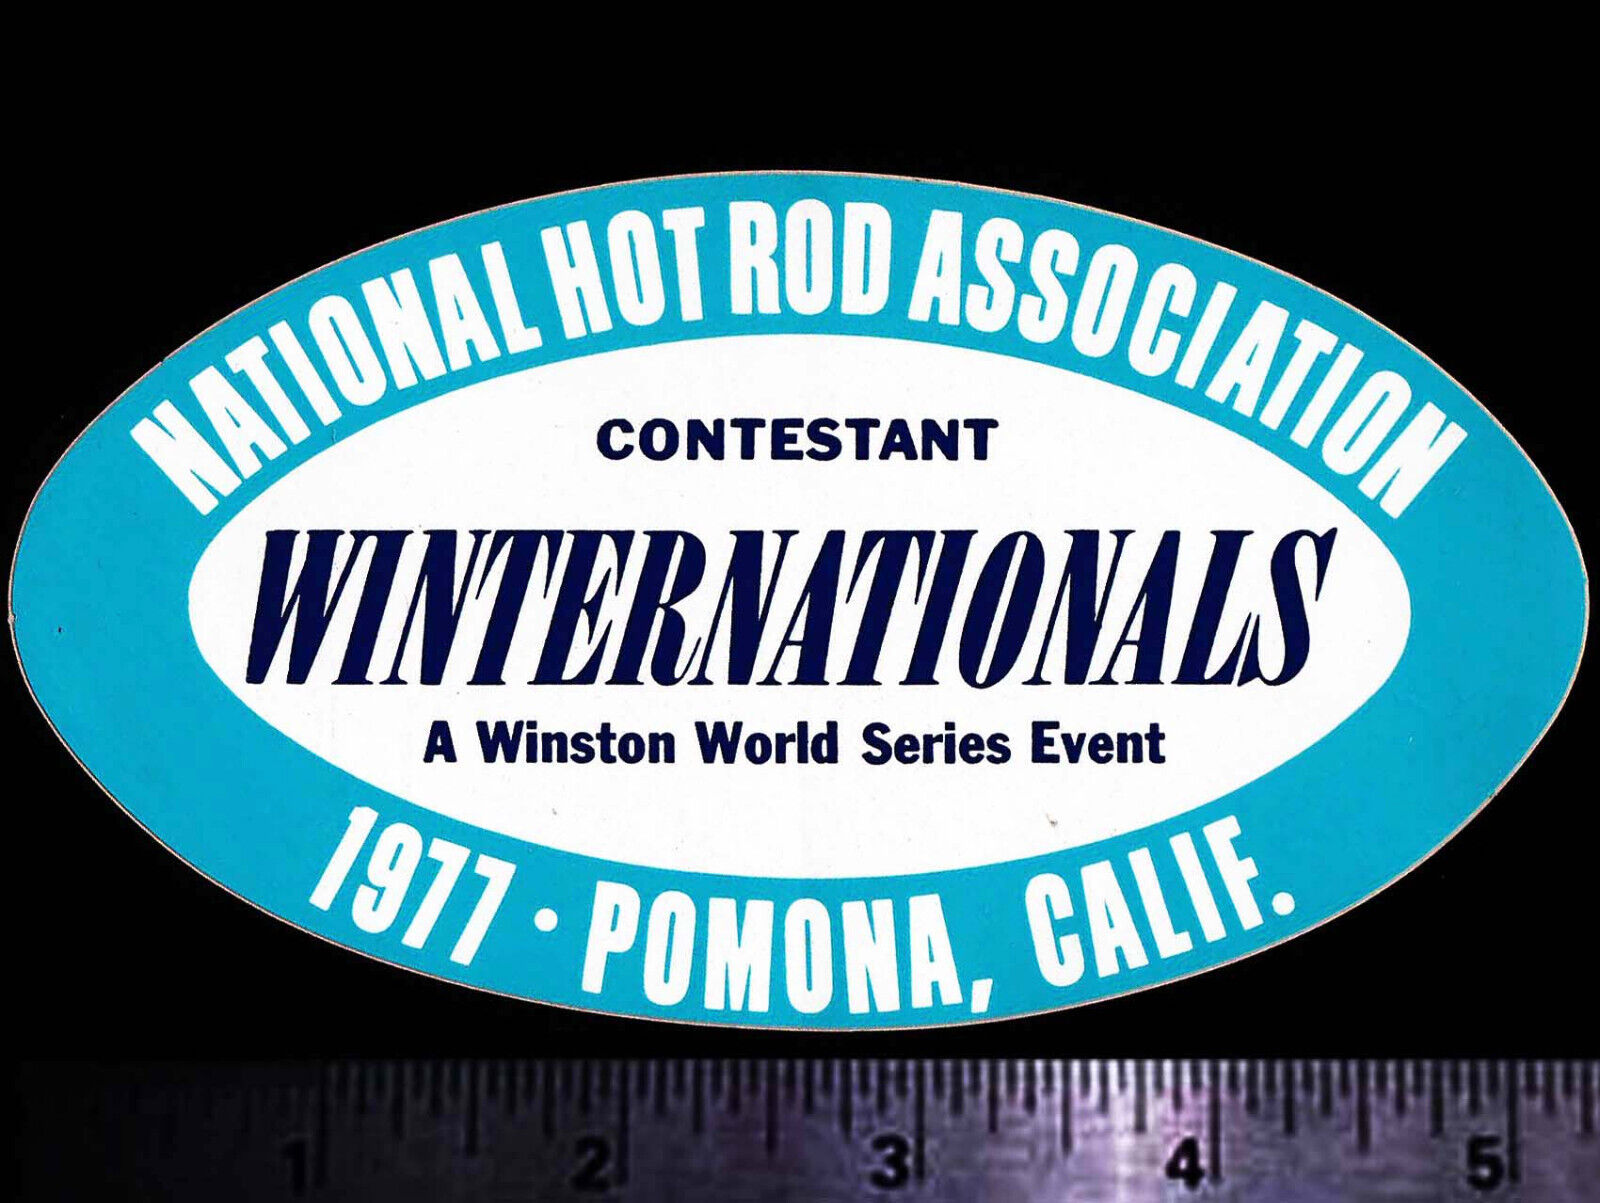 NHRA Winternationals Pomona, Calif. 1977 - Original Vintage Racing Decal/Sticker